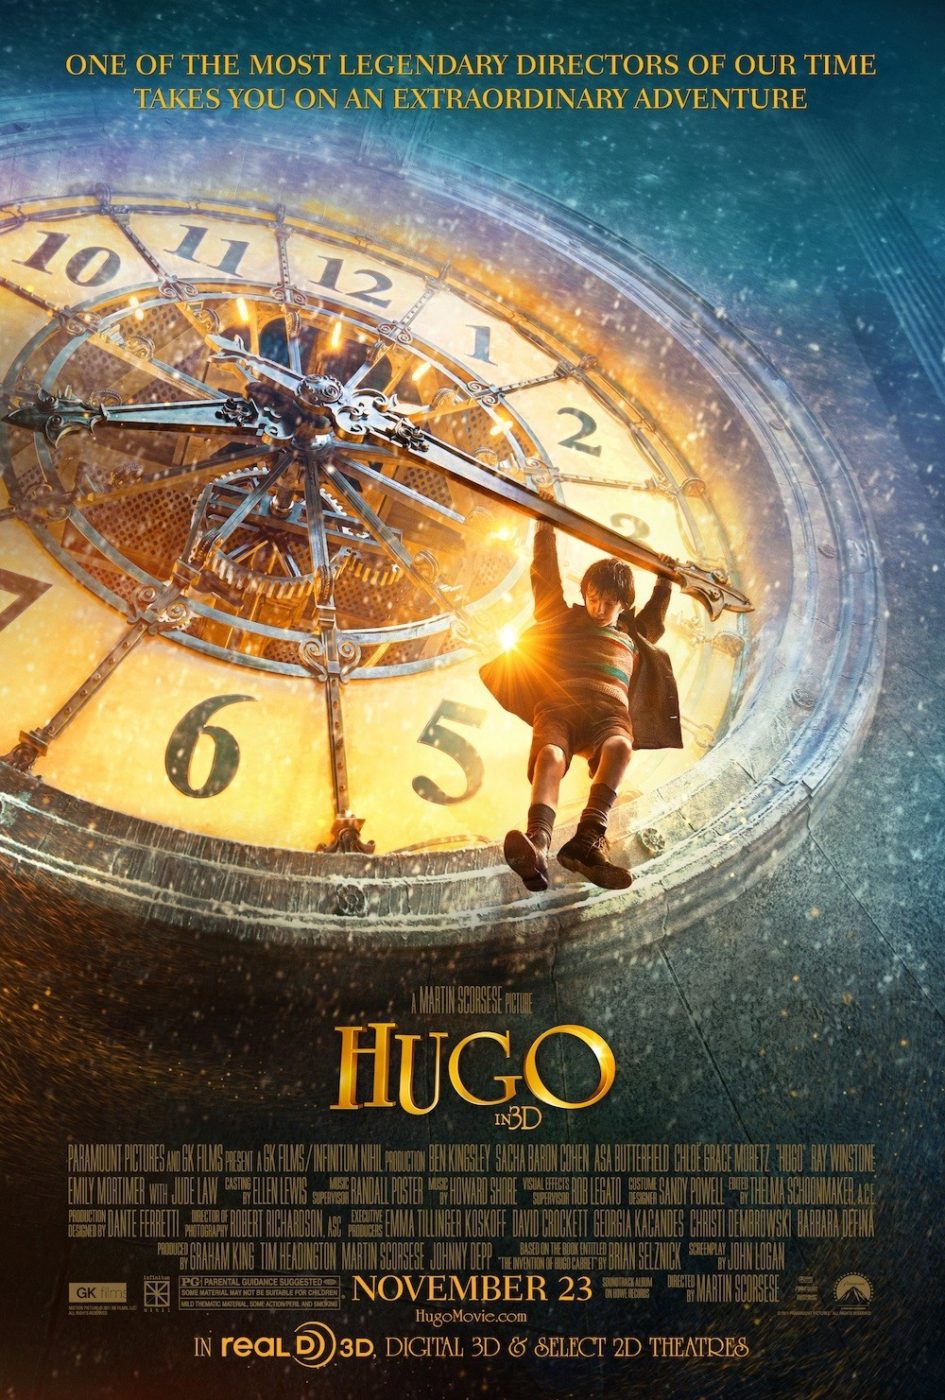 Martin Scorsese's Hugo Movie Poster Image | Top 100 Sci Fi Movies